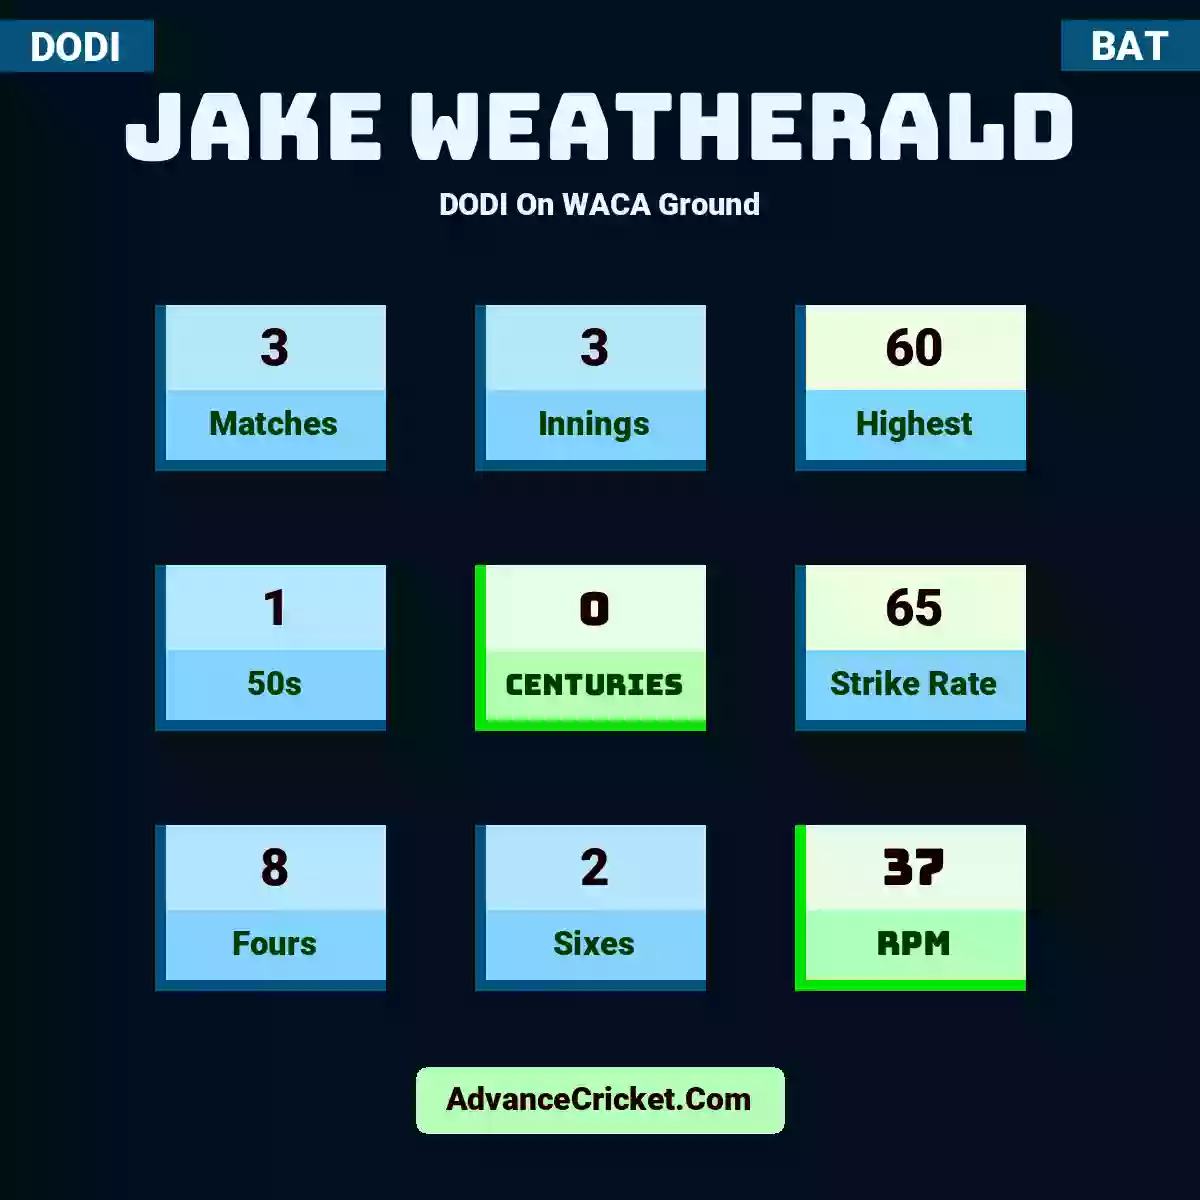 Jake Weatherald DODI  On WACA Ground, Jake Weatherald played 3 matches, scored 60 runs as highest, 1 half-centuries, and 0 centuries, with a strike rate of 65. J.Weatherald hit 8 fours and 2 sixes, with an RPM of 37.